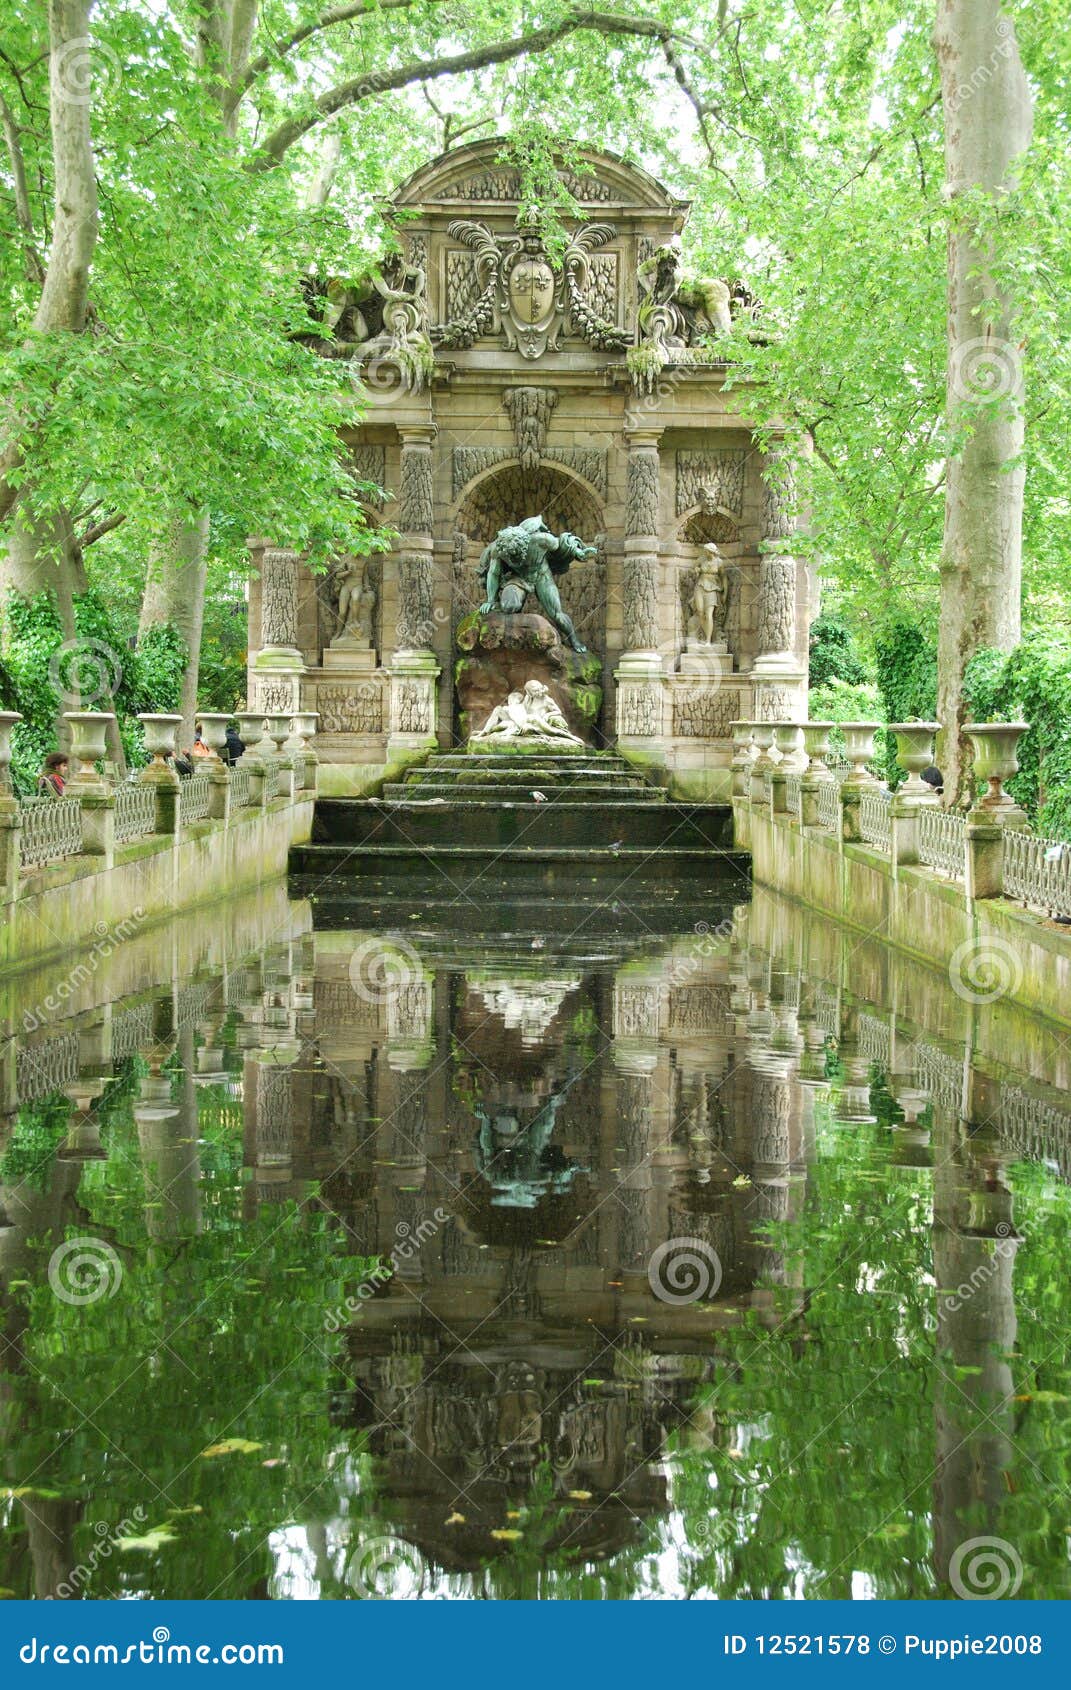 medici fountain-luxembourg garden